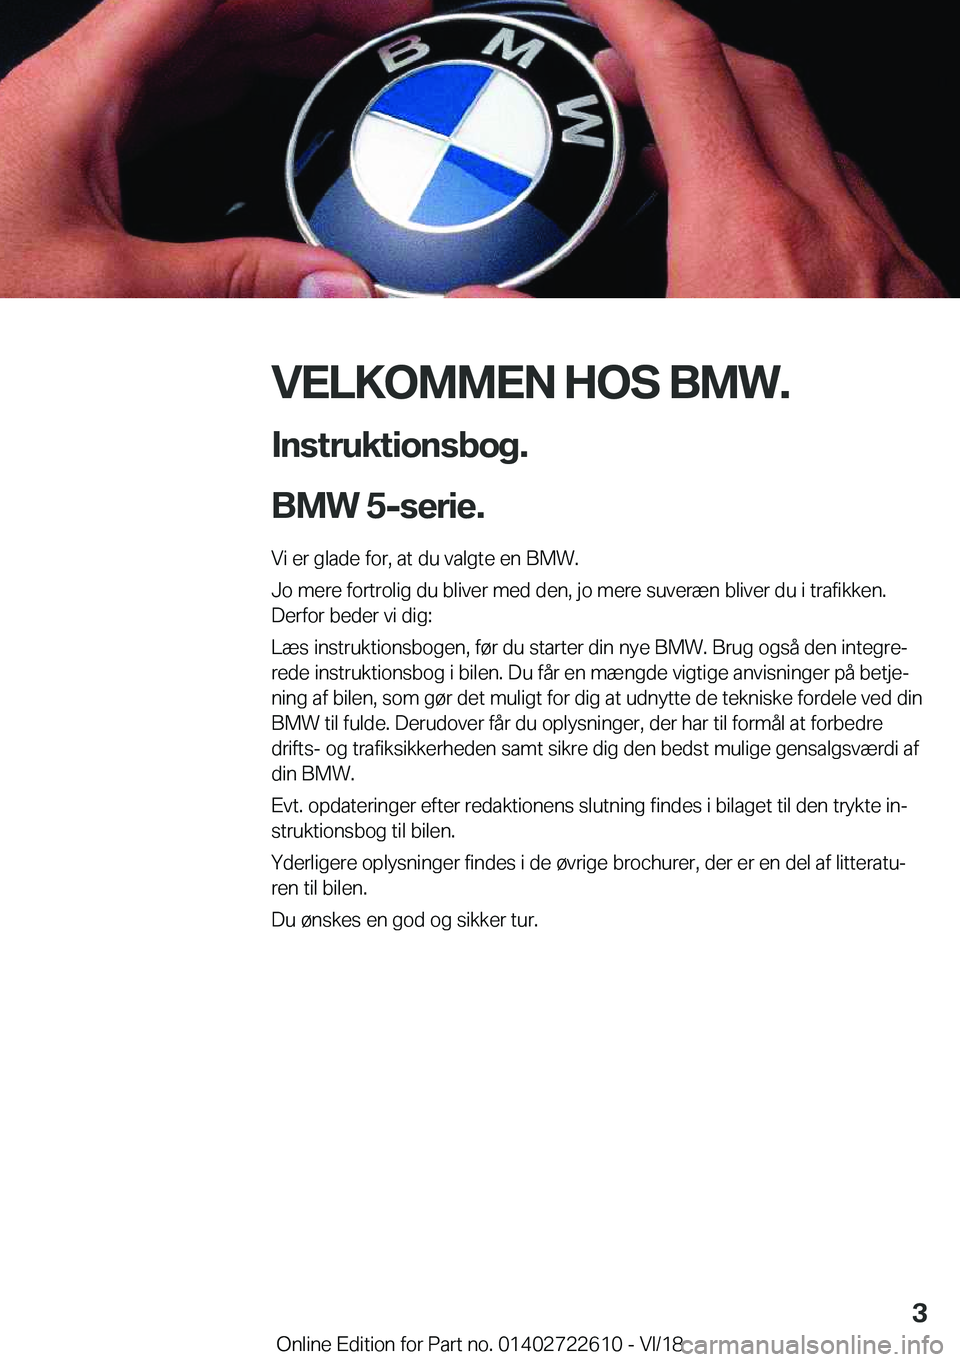 BMW 5 SERIES 2019  InstruktionsbØger (in Danish) �V�E�L�K�O�M�M�E�N��H�O�S��B�M�W�.
�I�n�s�t�r�u�k�t�i�o�n�s�b�o�g�.
�B�M�W��5�-�s�e�r�i�e�. �V�i��e�r��g�l�a�d�e��f�o�r�,��a�t��d�u��v�a�l�g�t�e��e�n��B�M�W�.
�J�o��m�e�r�e��f�o�r�t�r�o�l